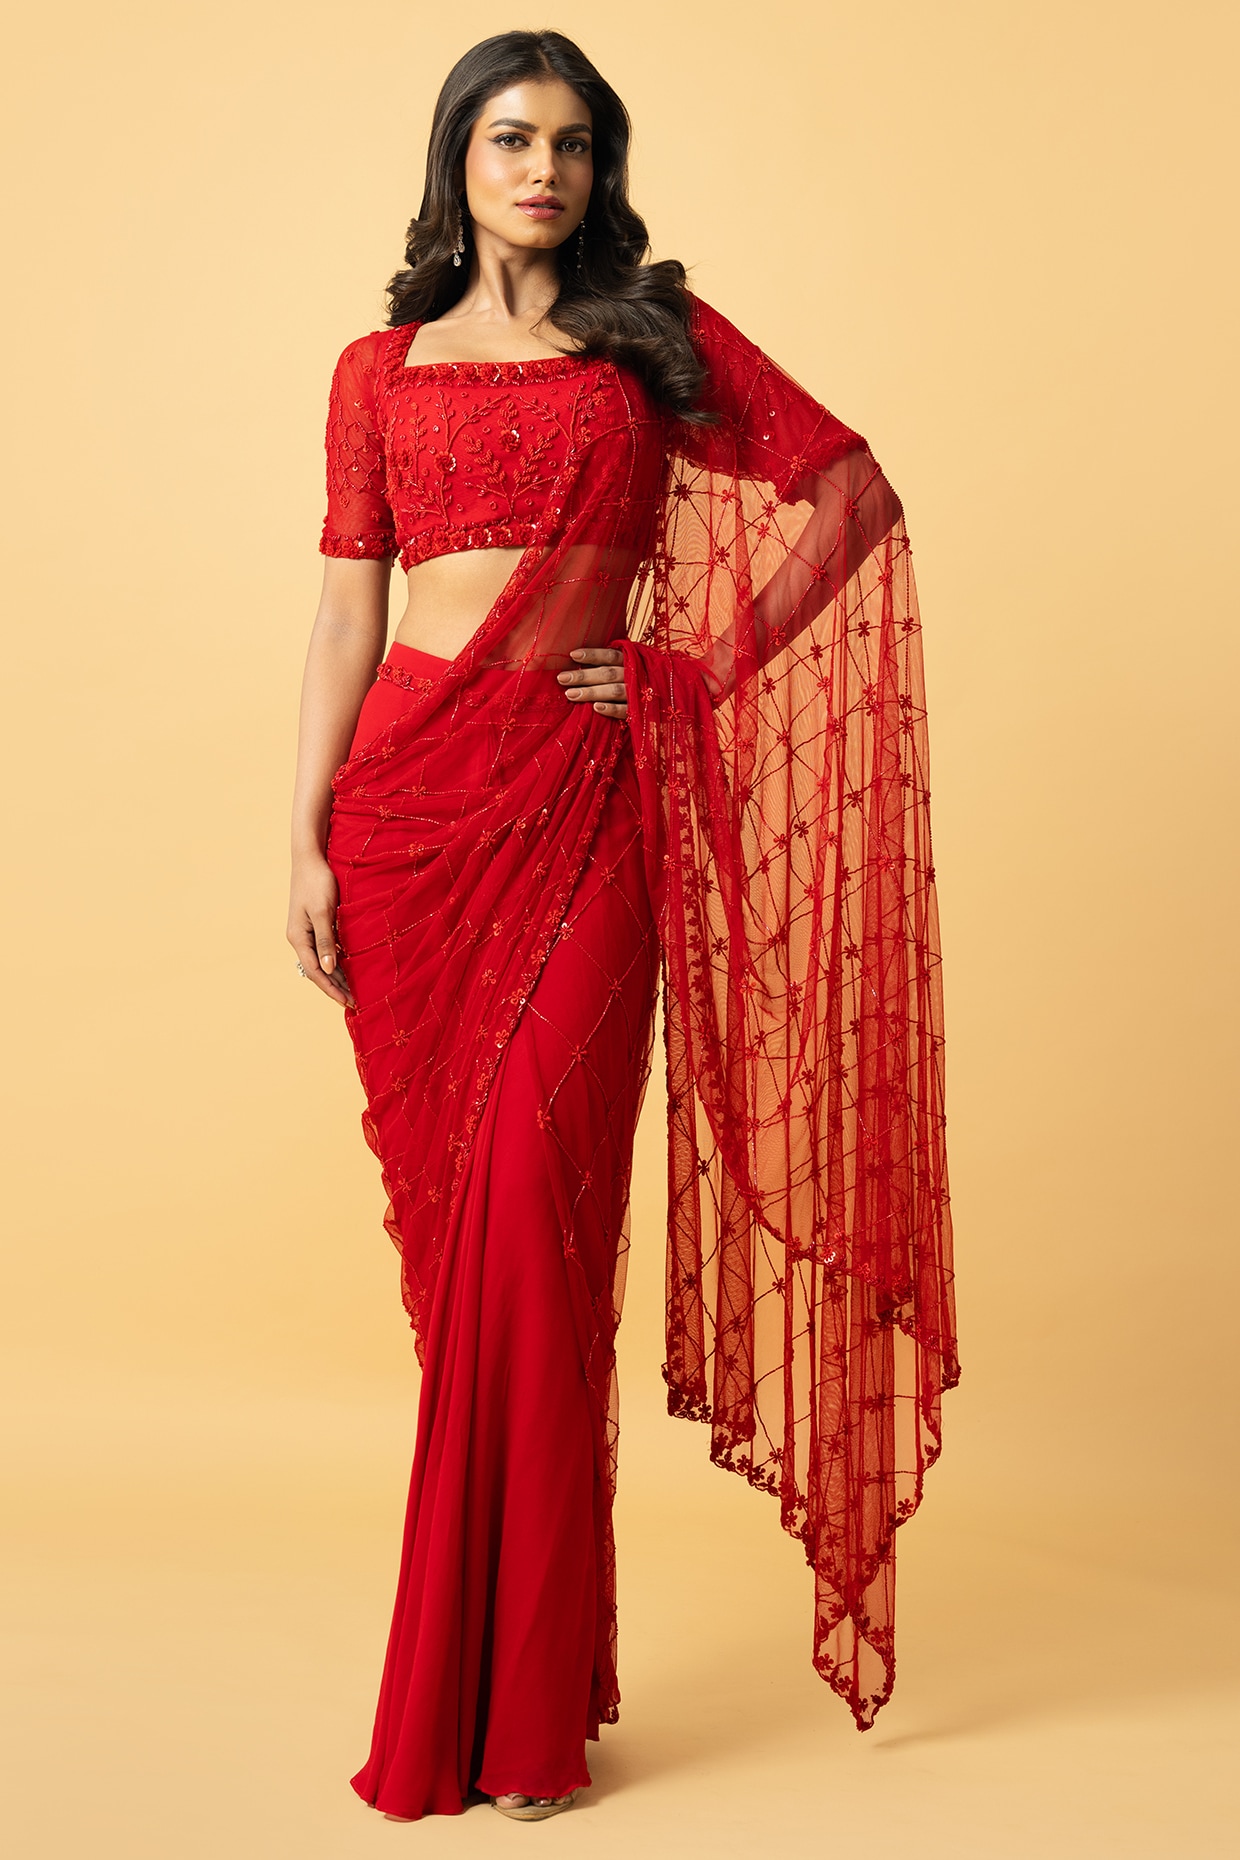 Sabyasachi Bride In Red Saree For Her Reception Look - Shaadiwish